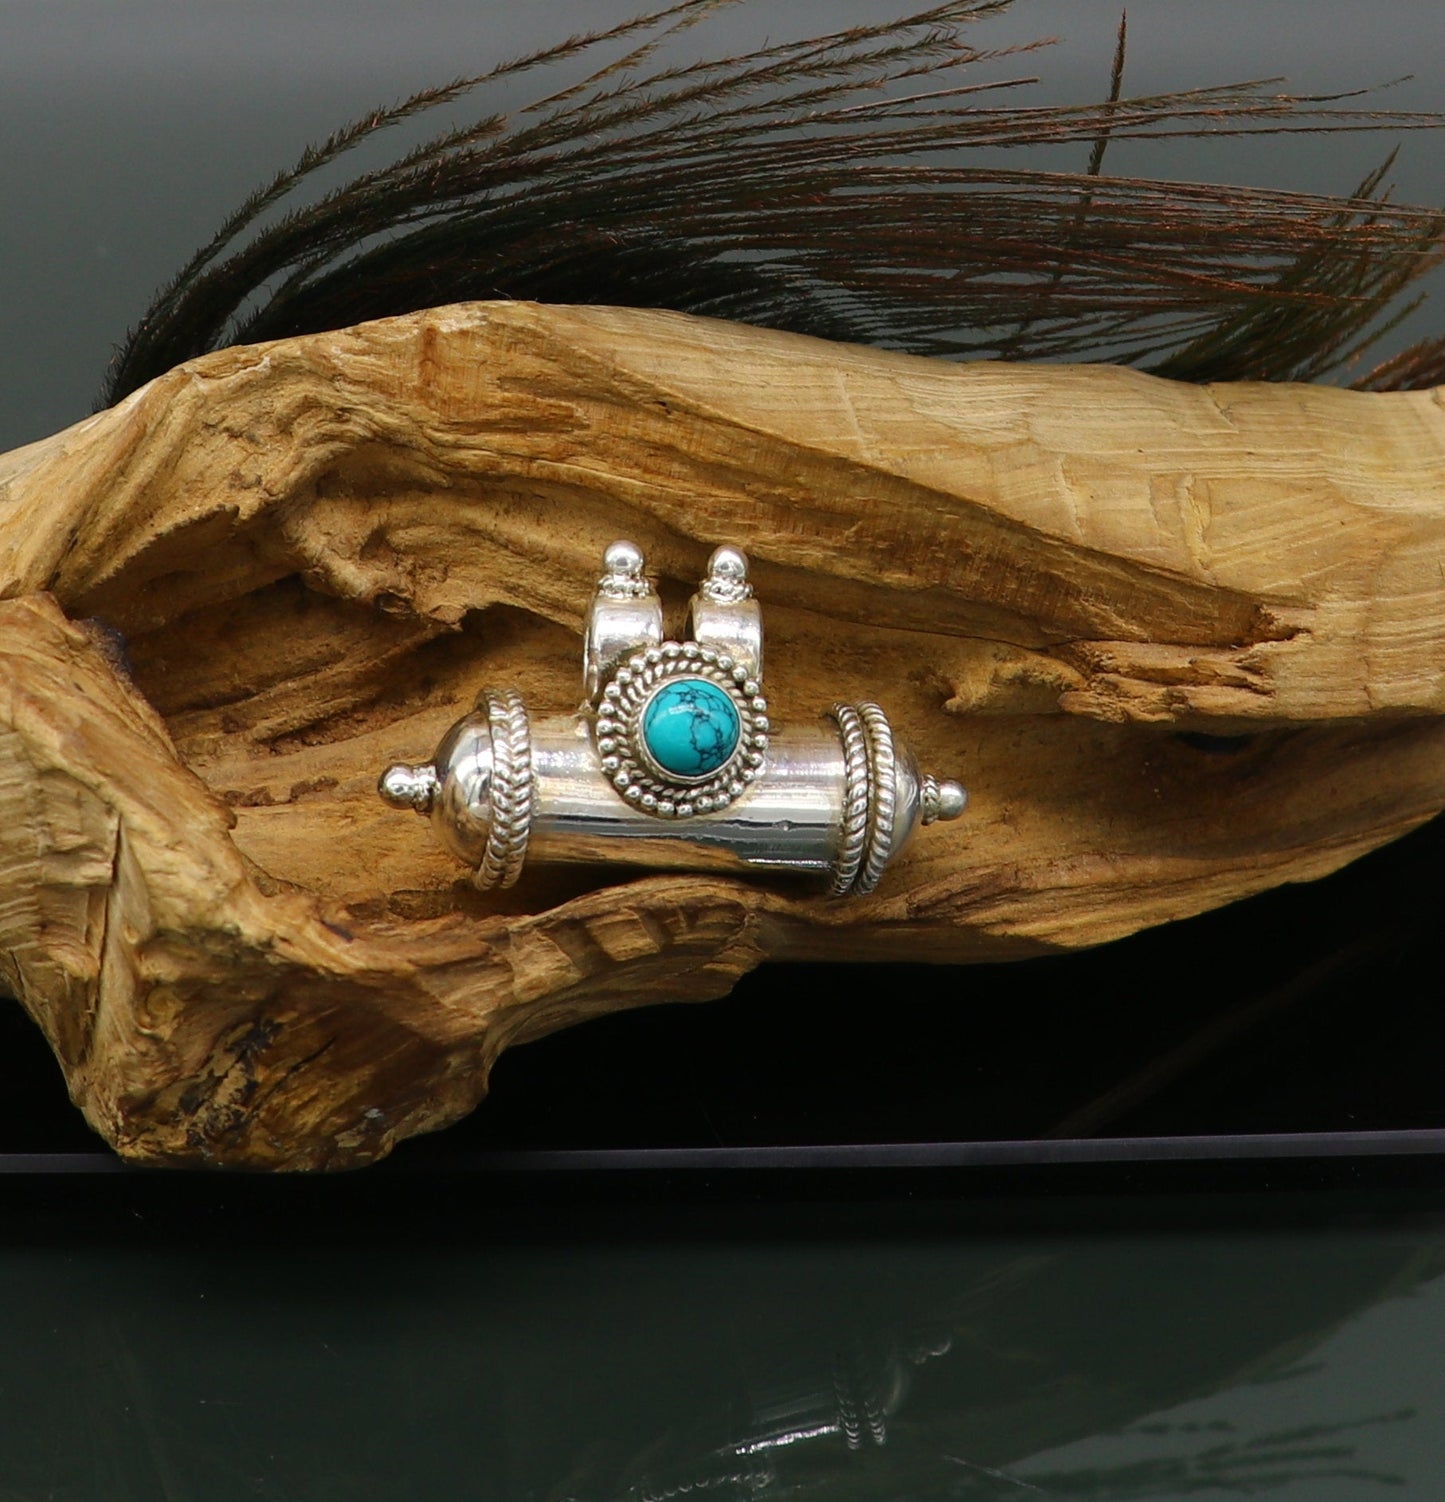 Fine 925 silver amulet pendant, fabulous turquoise stone box pendant, unique stylish fancy tribal jewelry, brides elegant pendant ssp379 - TRIBAL ORNAMENTS